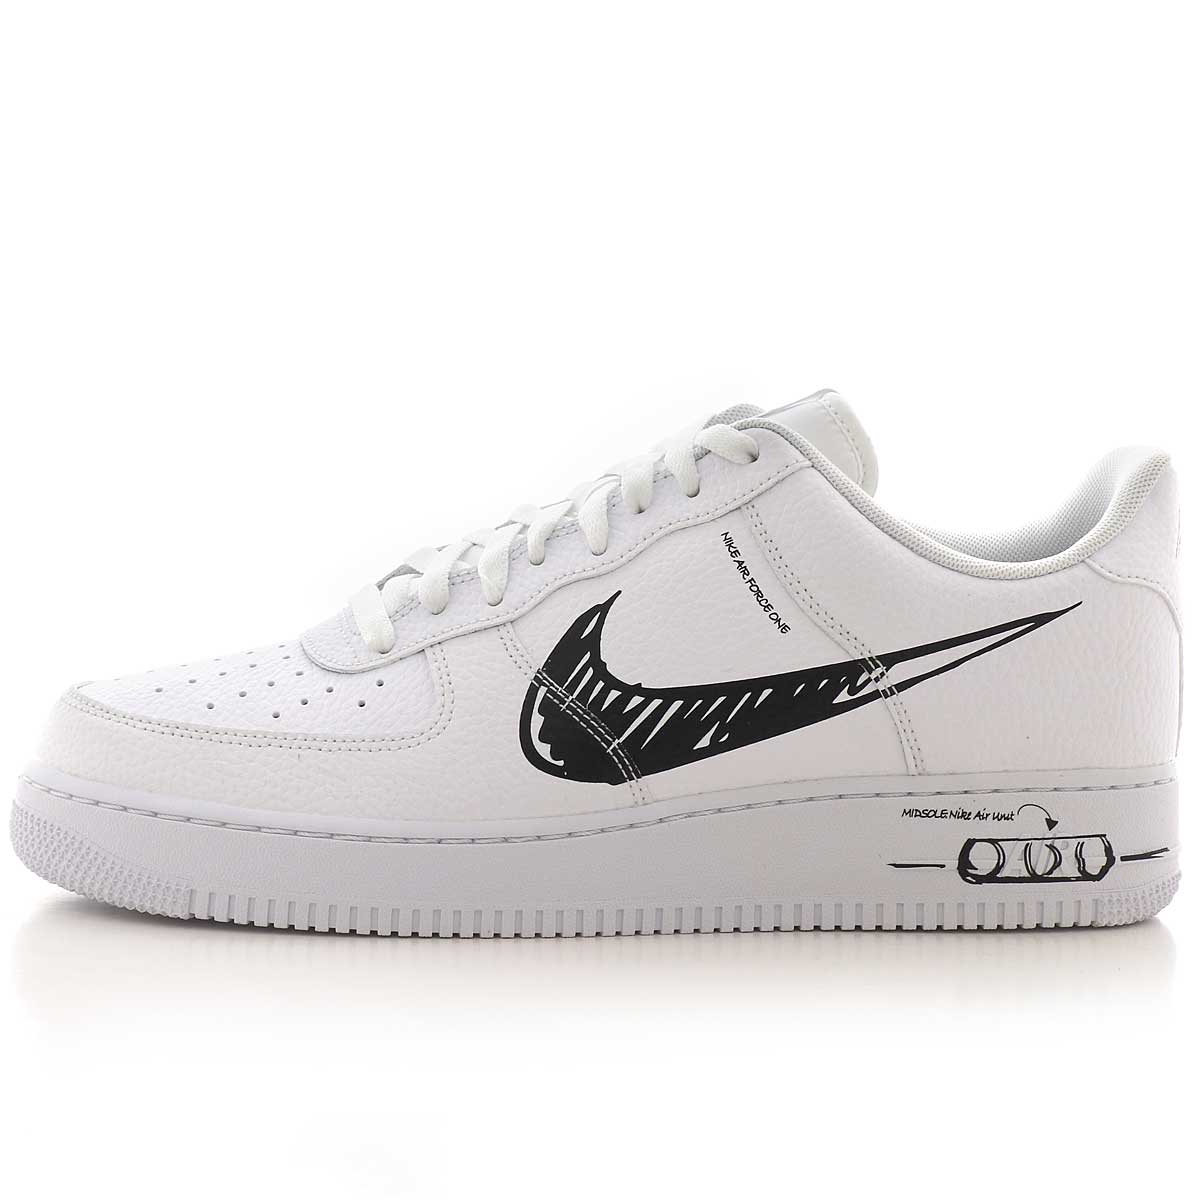 Nike Air Force 1 Lv8 Utility Shoes (black/white black)